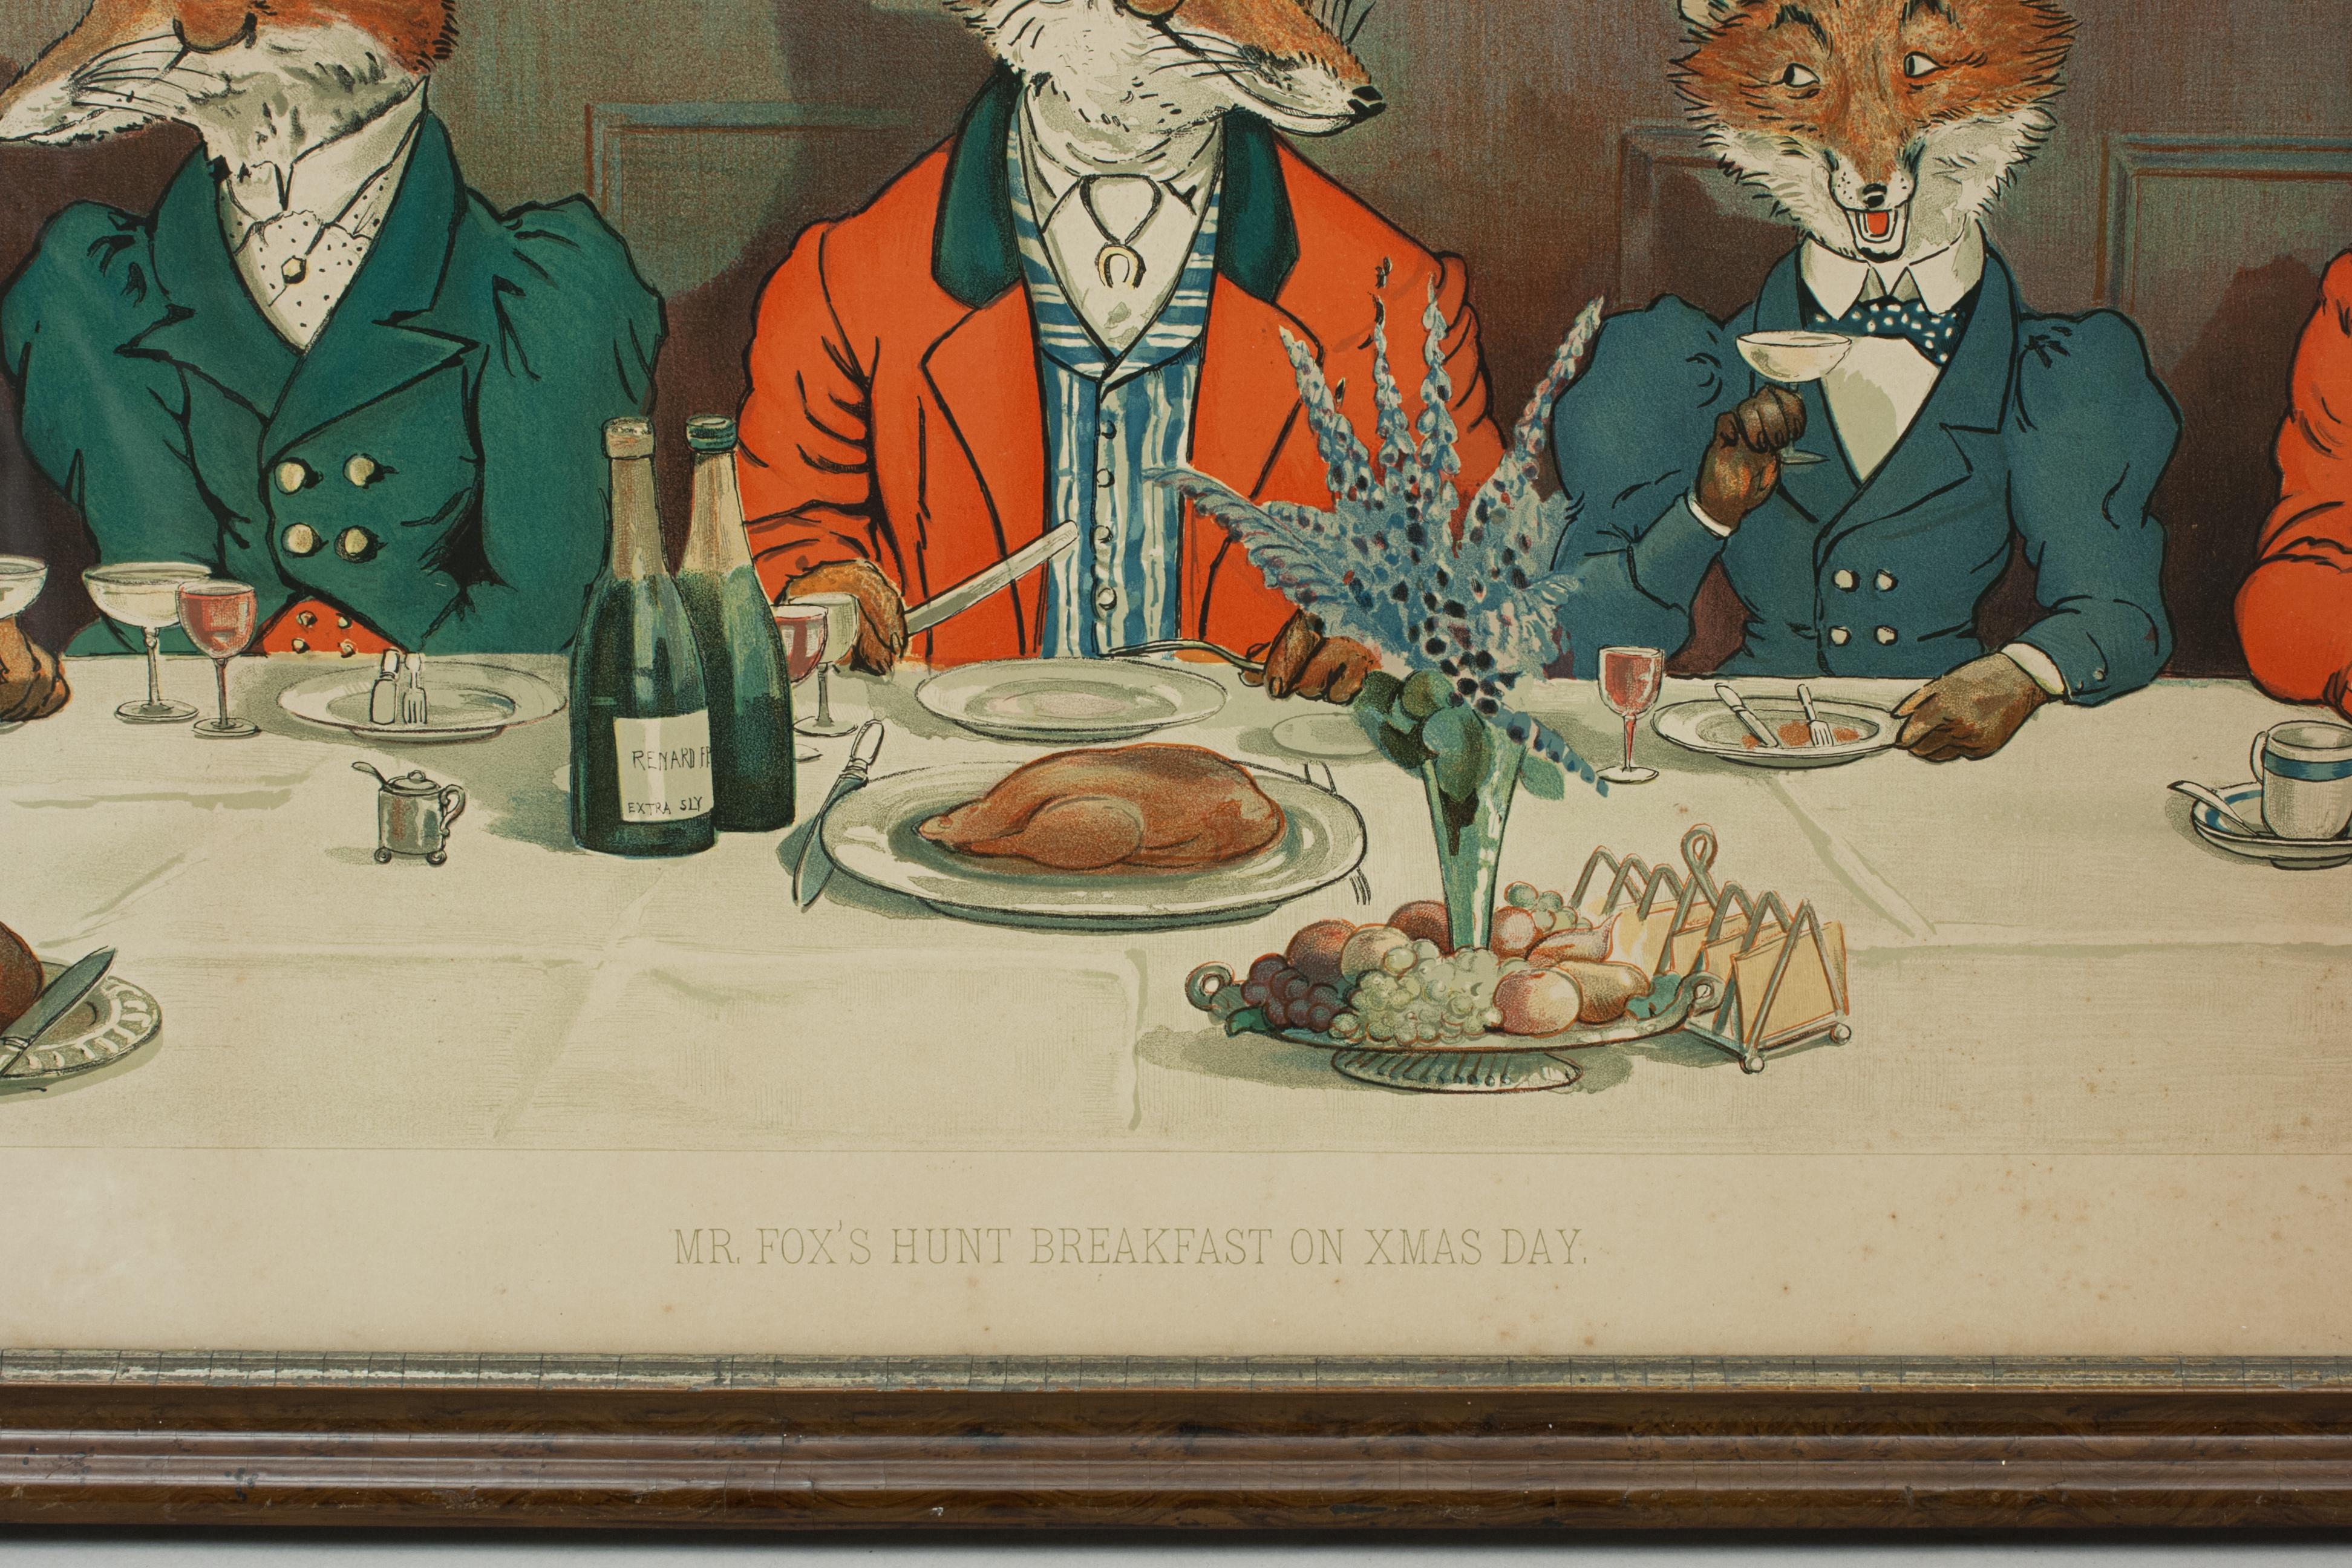 Sporting Art Vintage Fox Hunting, Mr. Fox's Hunt Breakfast on Xmas Day after Harry Neilson